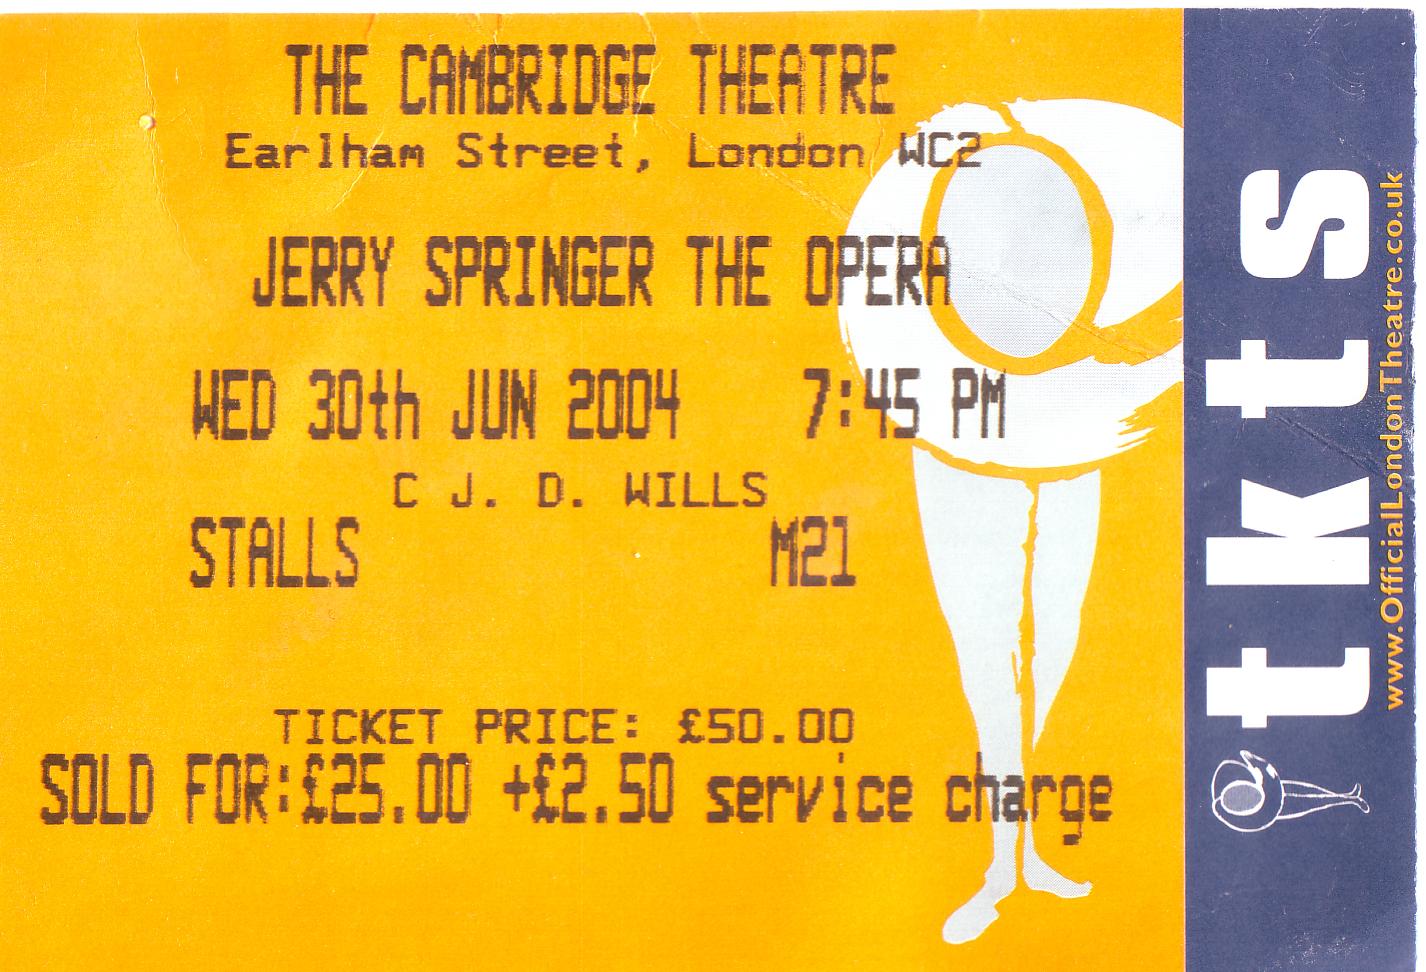 2004-06-30-Jerry Springer: The Opera